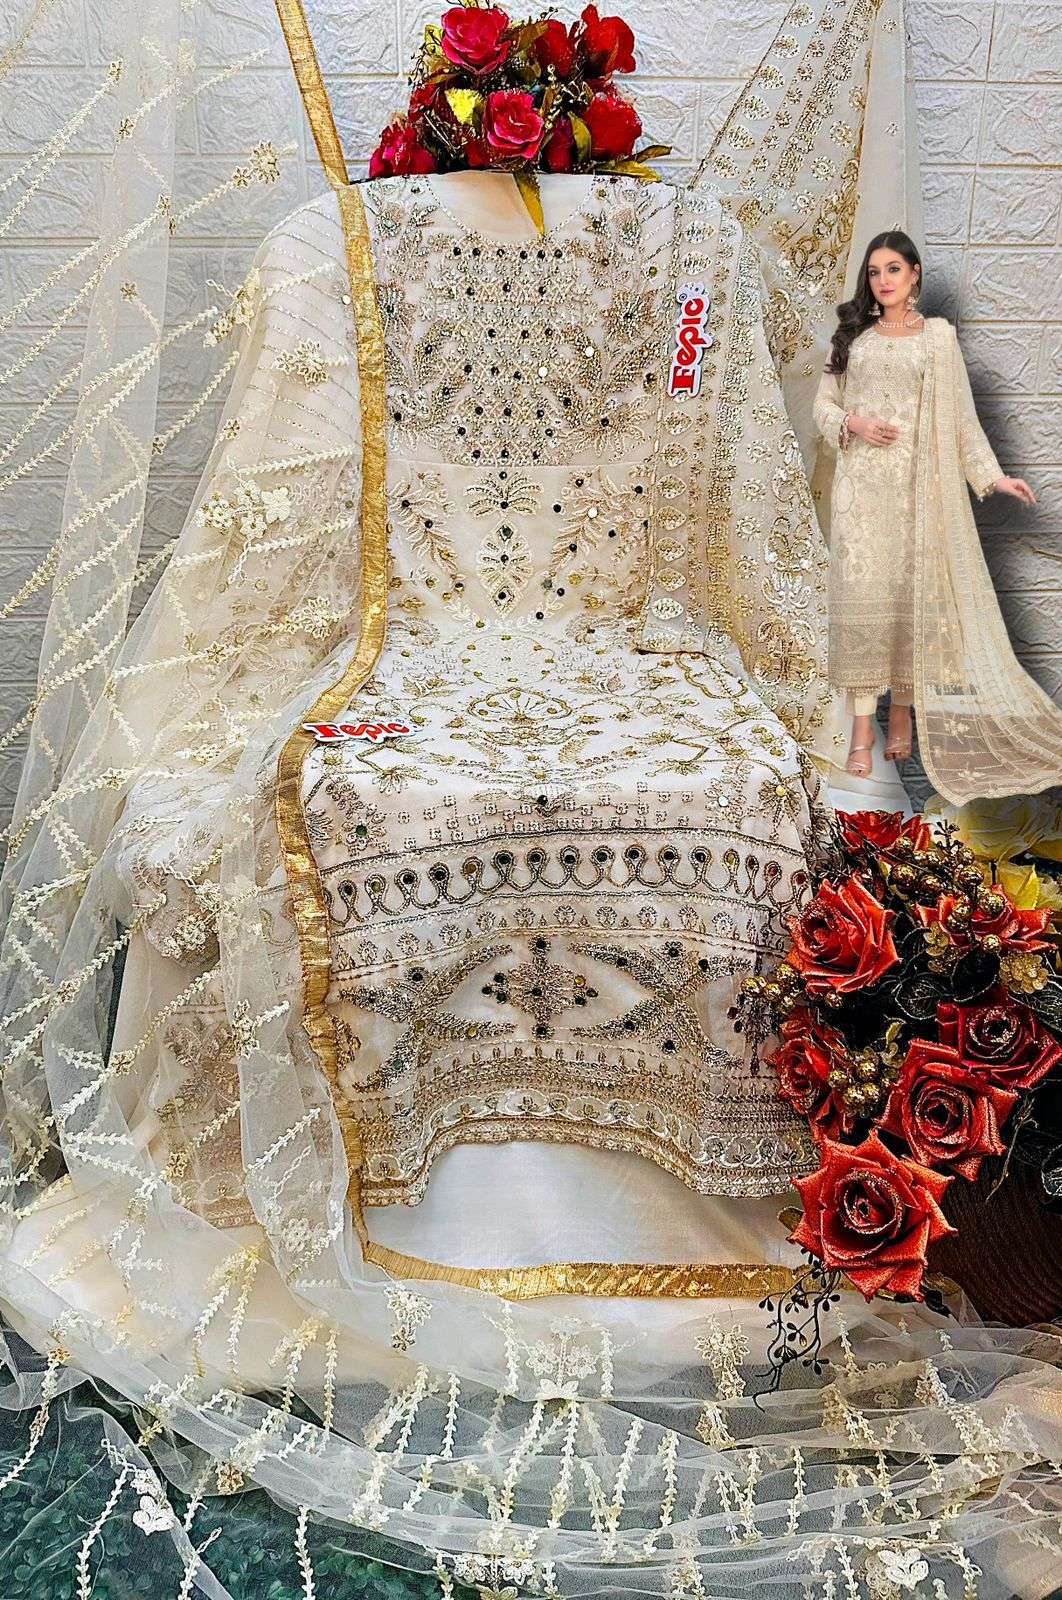 fepic 1283 series bridal look designer pakistani salwar suits surat 